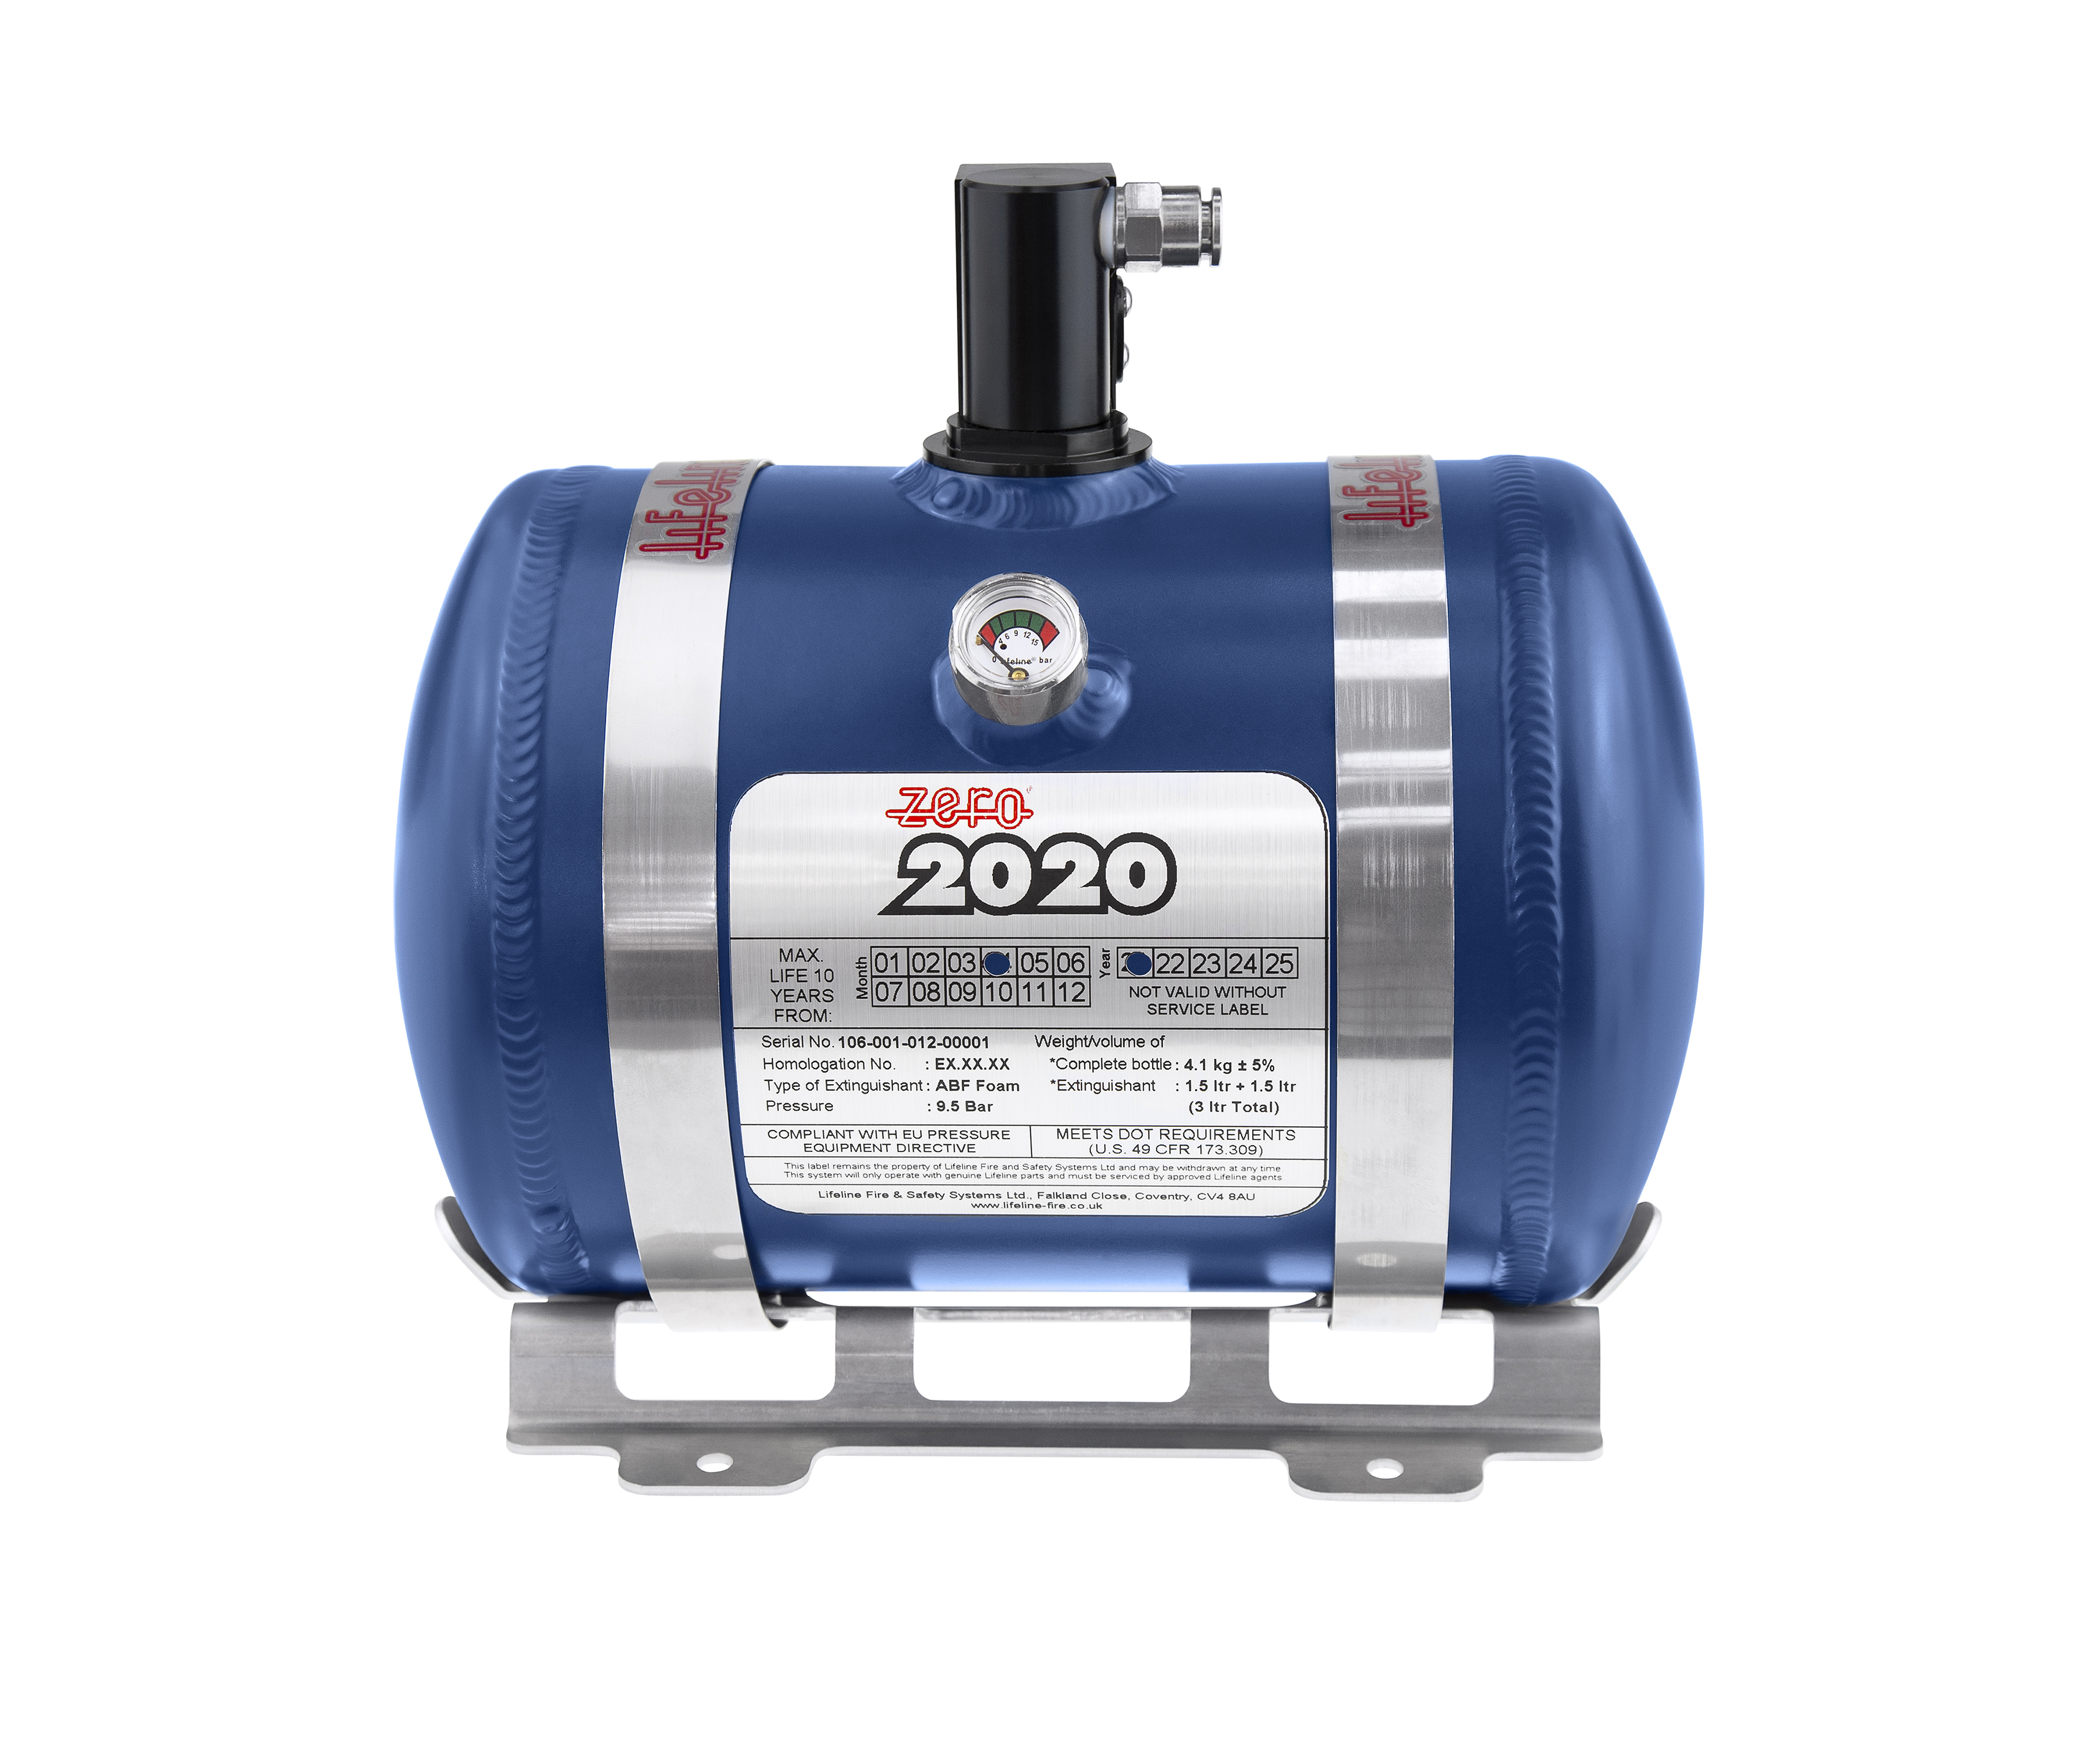 Lifeline Zero 2020 3.0 Litre Electrical Fire Extinguisher Kit 